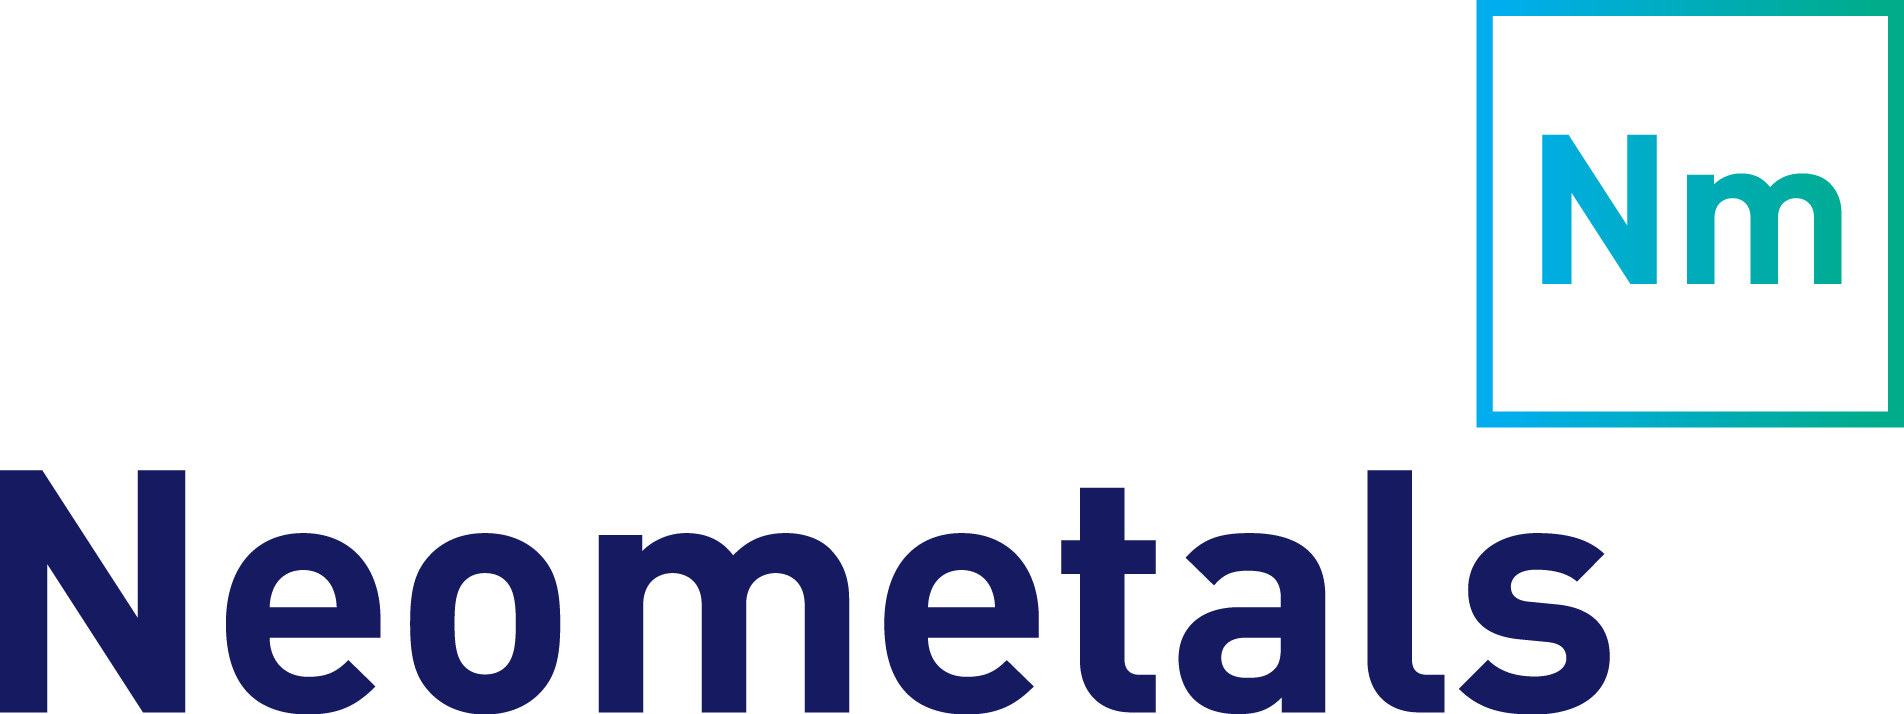 Neometals Ltd (NMT:ASX) logo